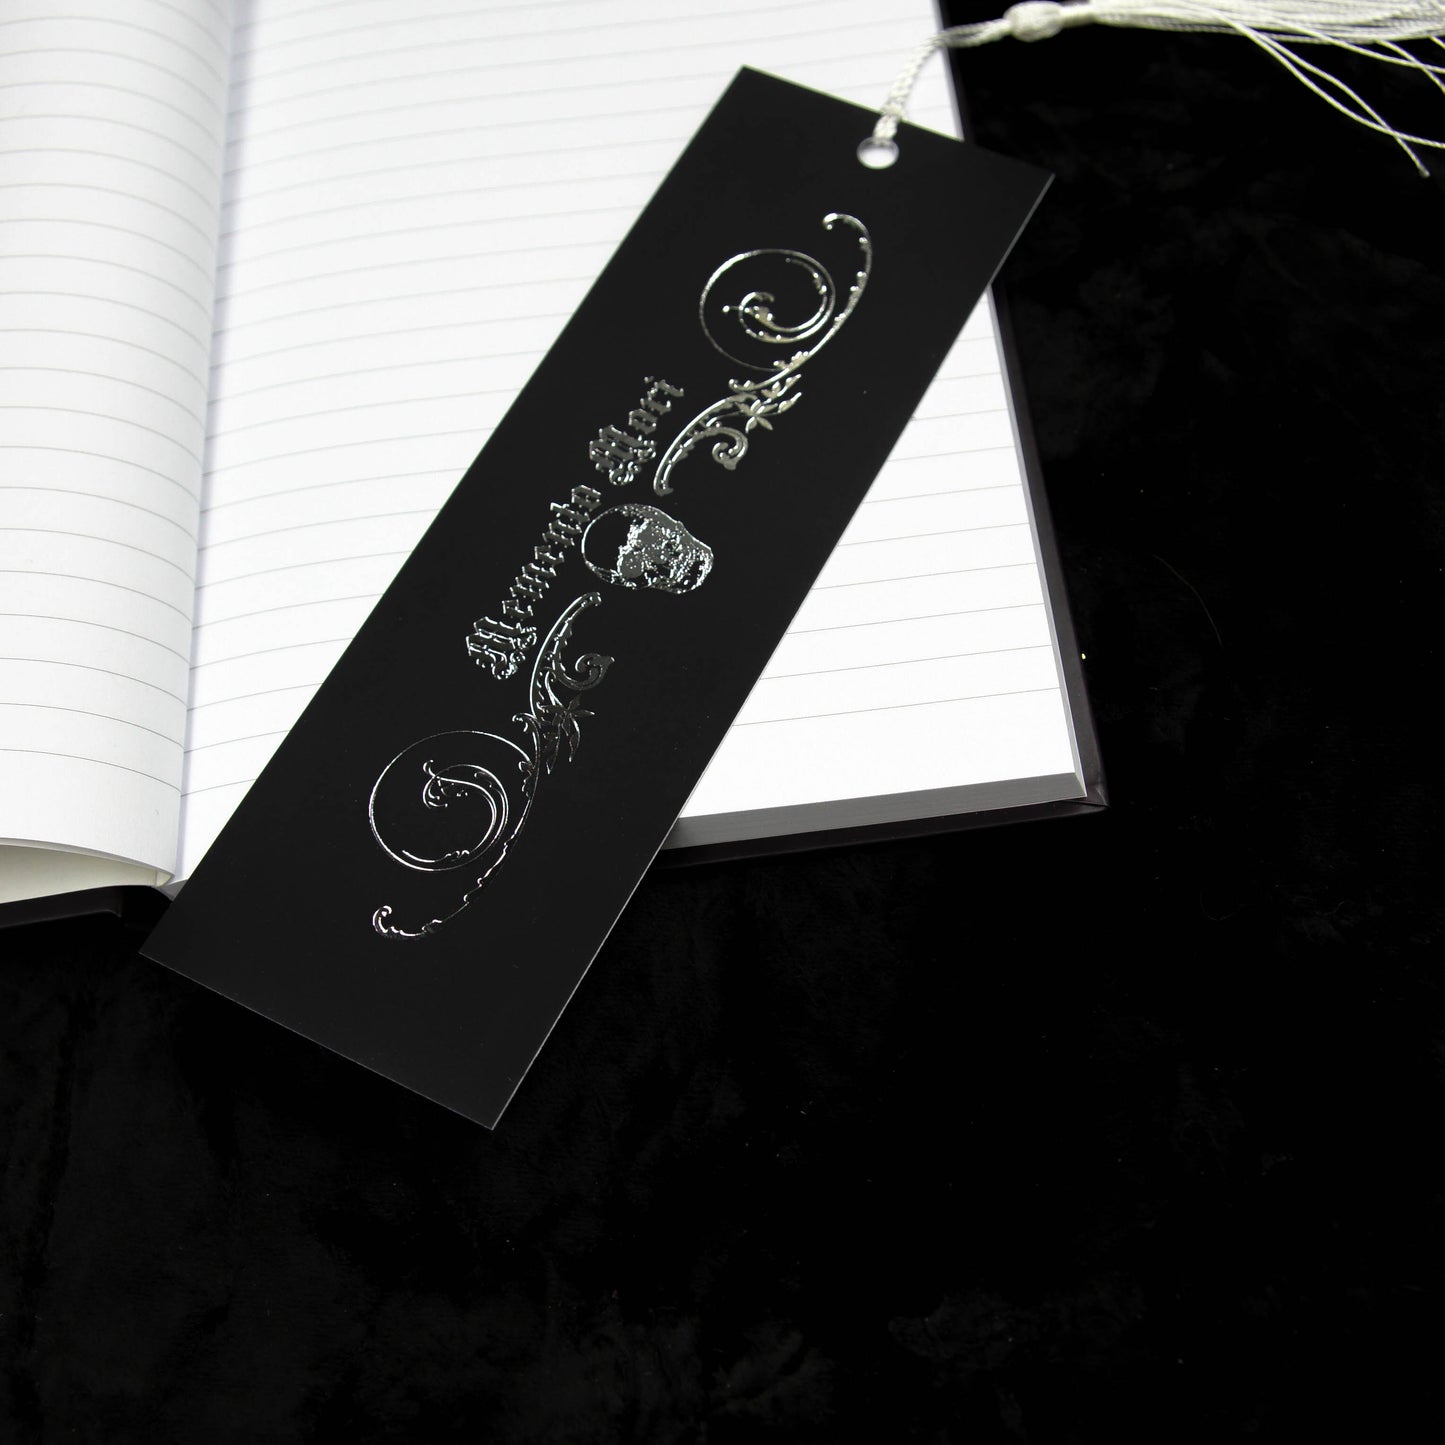 Memento Mori Foiled Gothic Bookmark